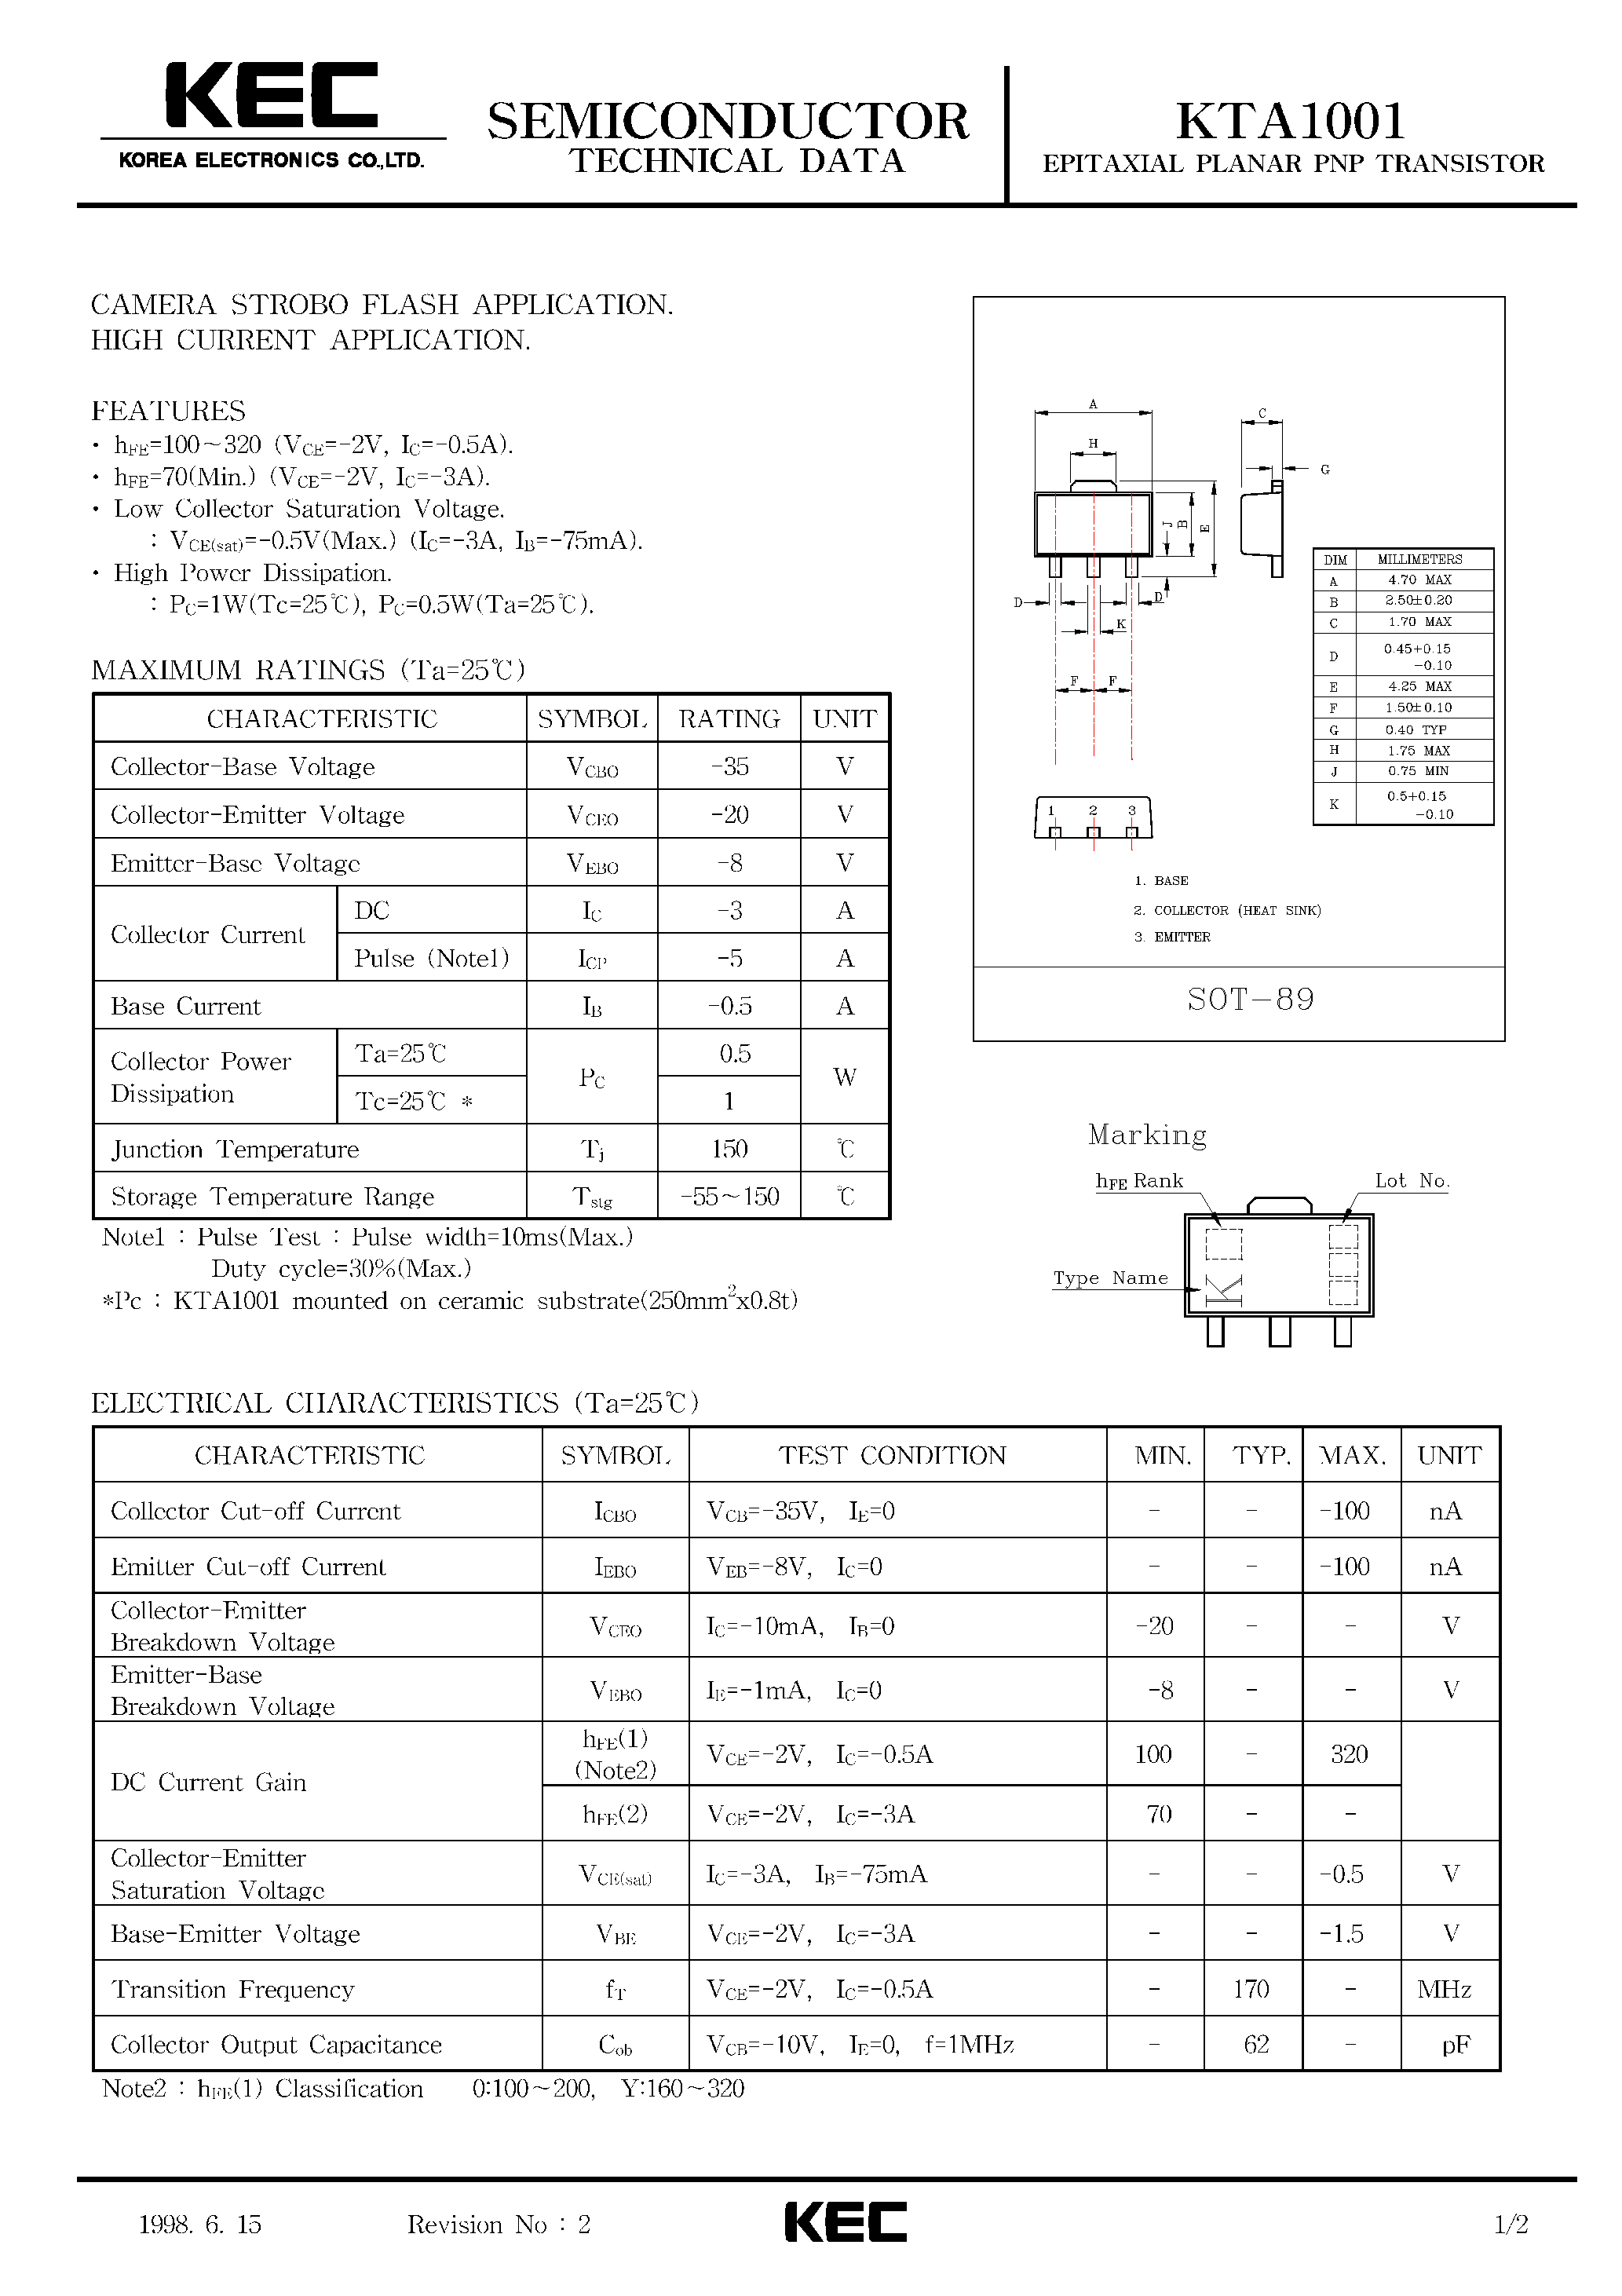 Datasheet KTA1001 - EPITAXIAL PLANAR PNP TRANSISTOR (CAMERA STROBO FLASH/ HIGH CURRENT) page 1